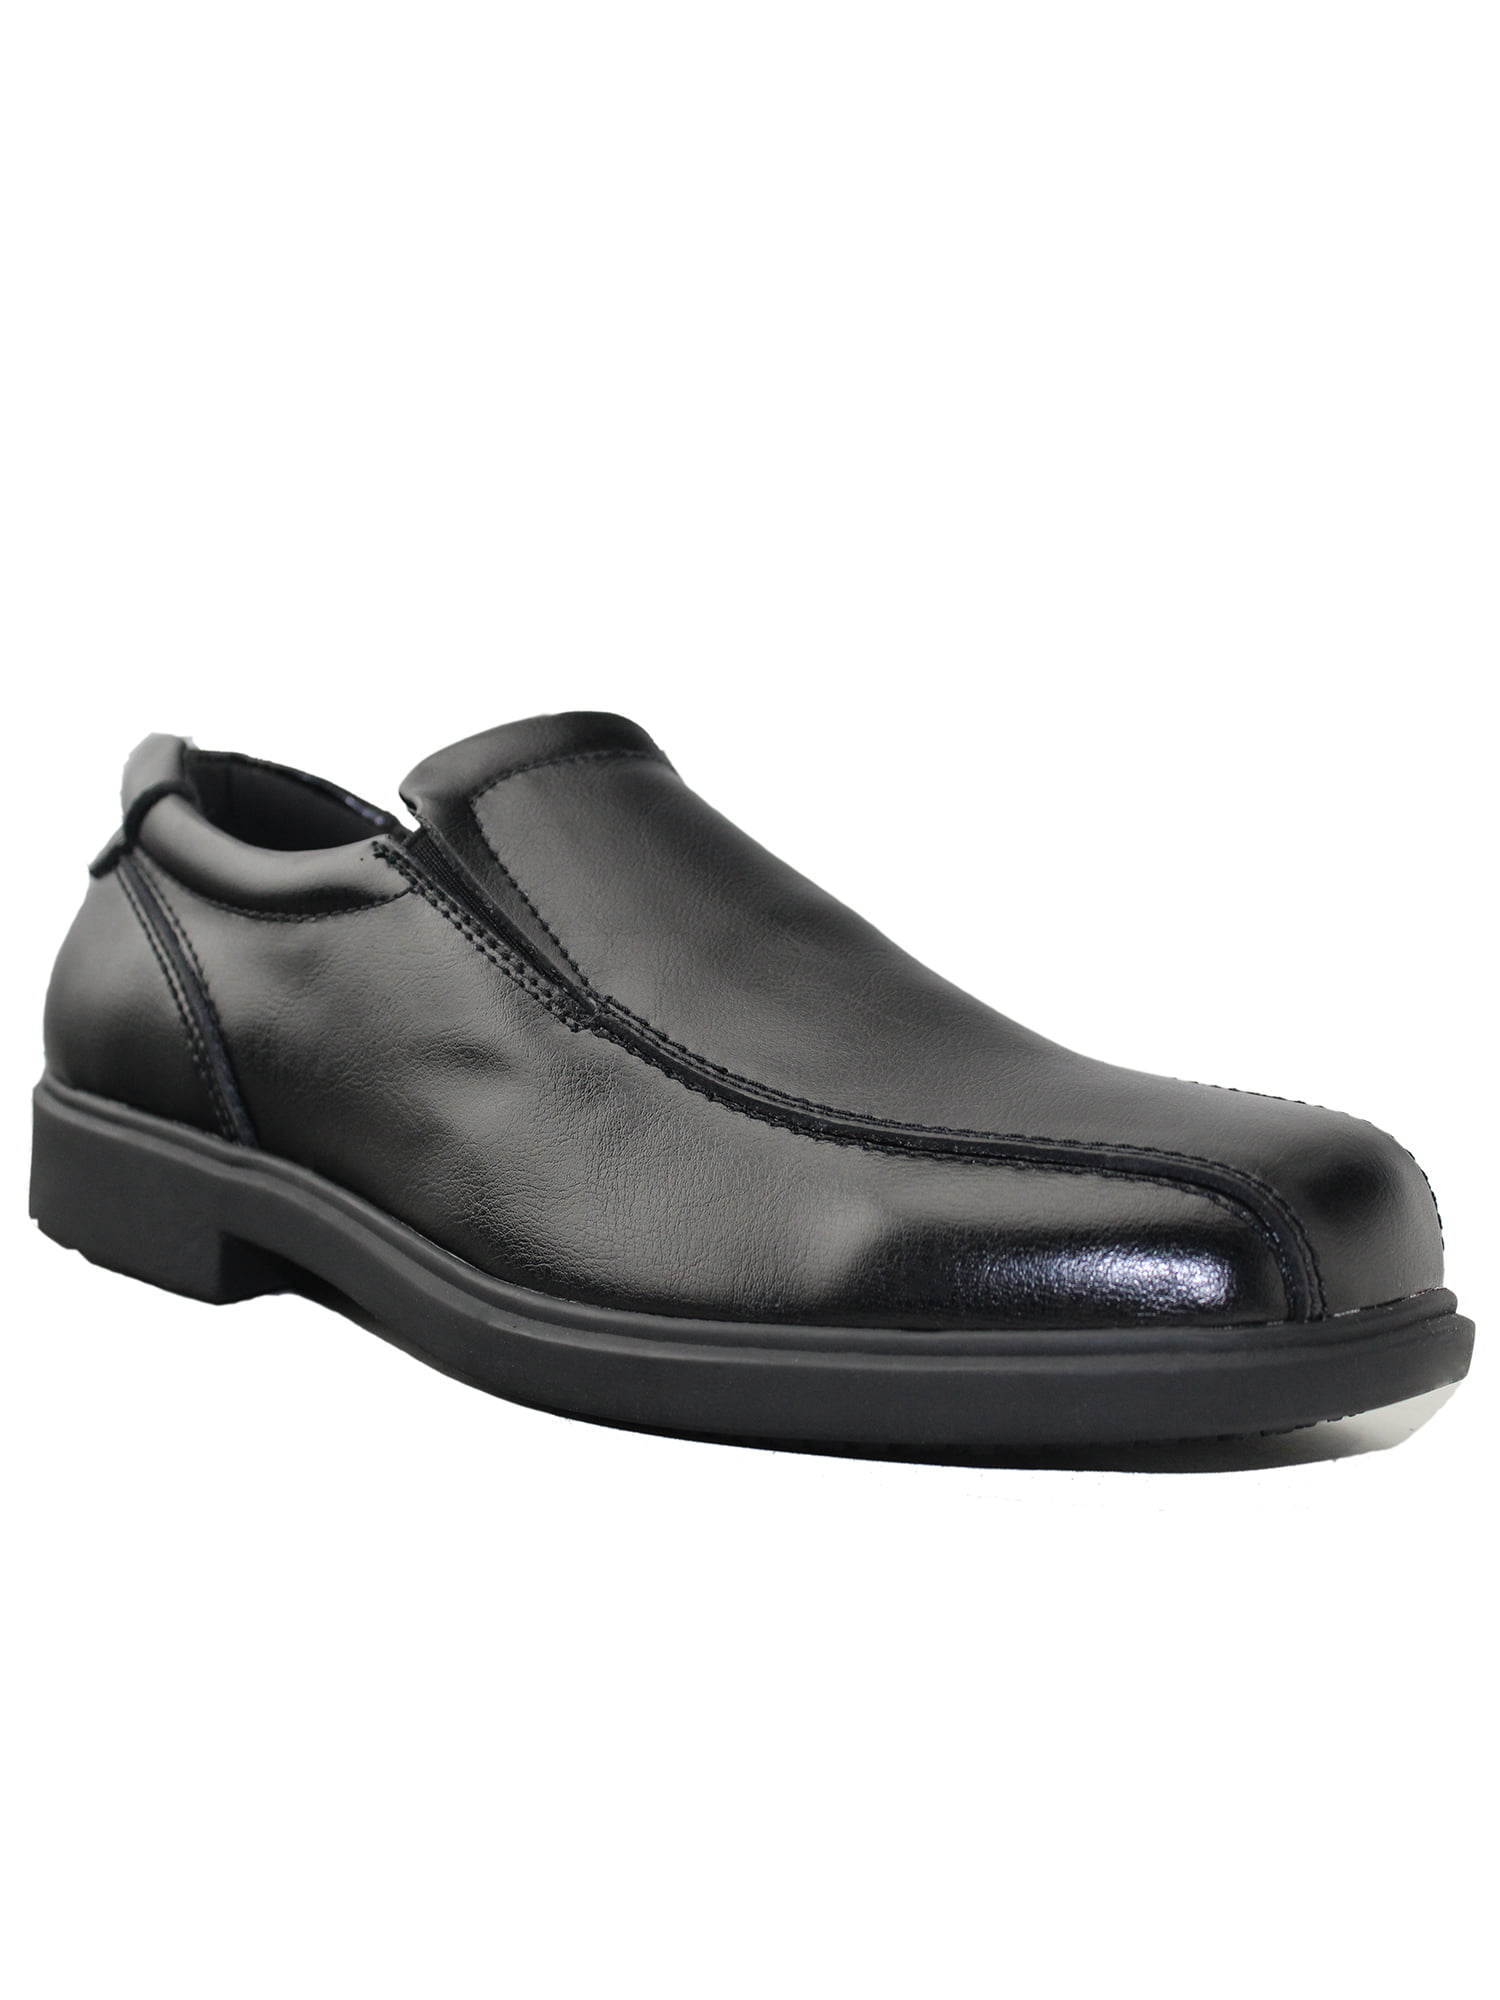 Men's Shoes Fashion Leather Men Casual Shoes Comfortable Outdoor ...